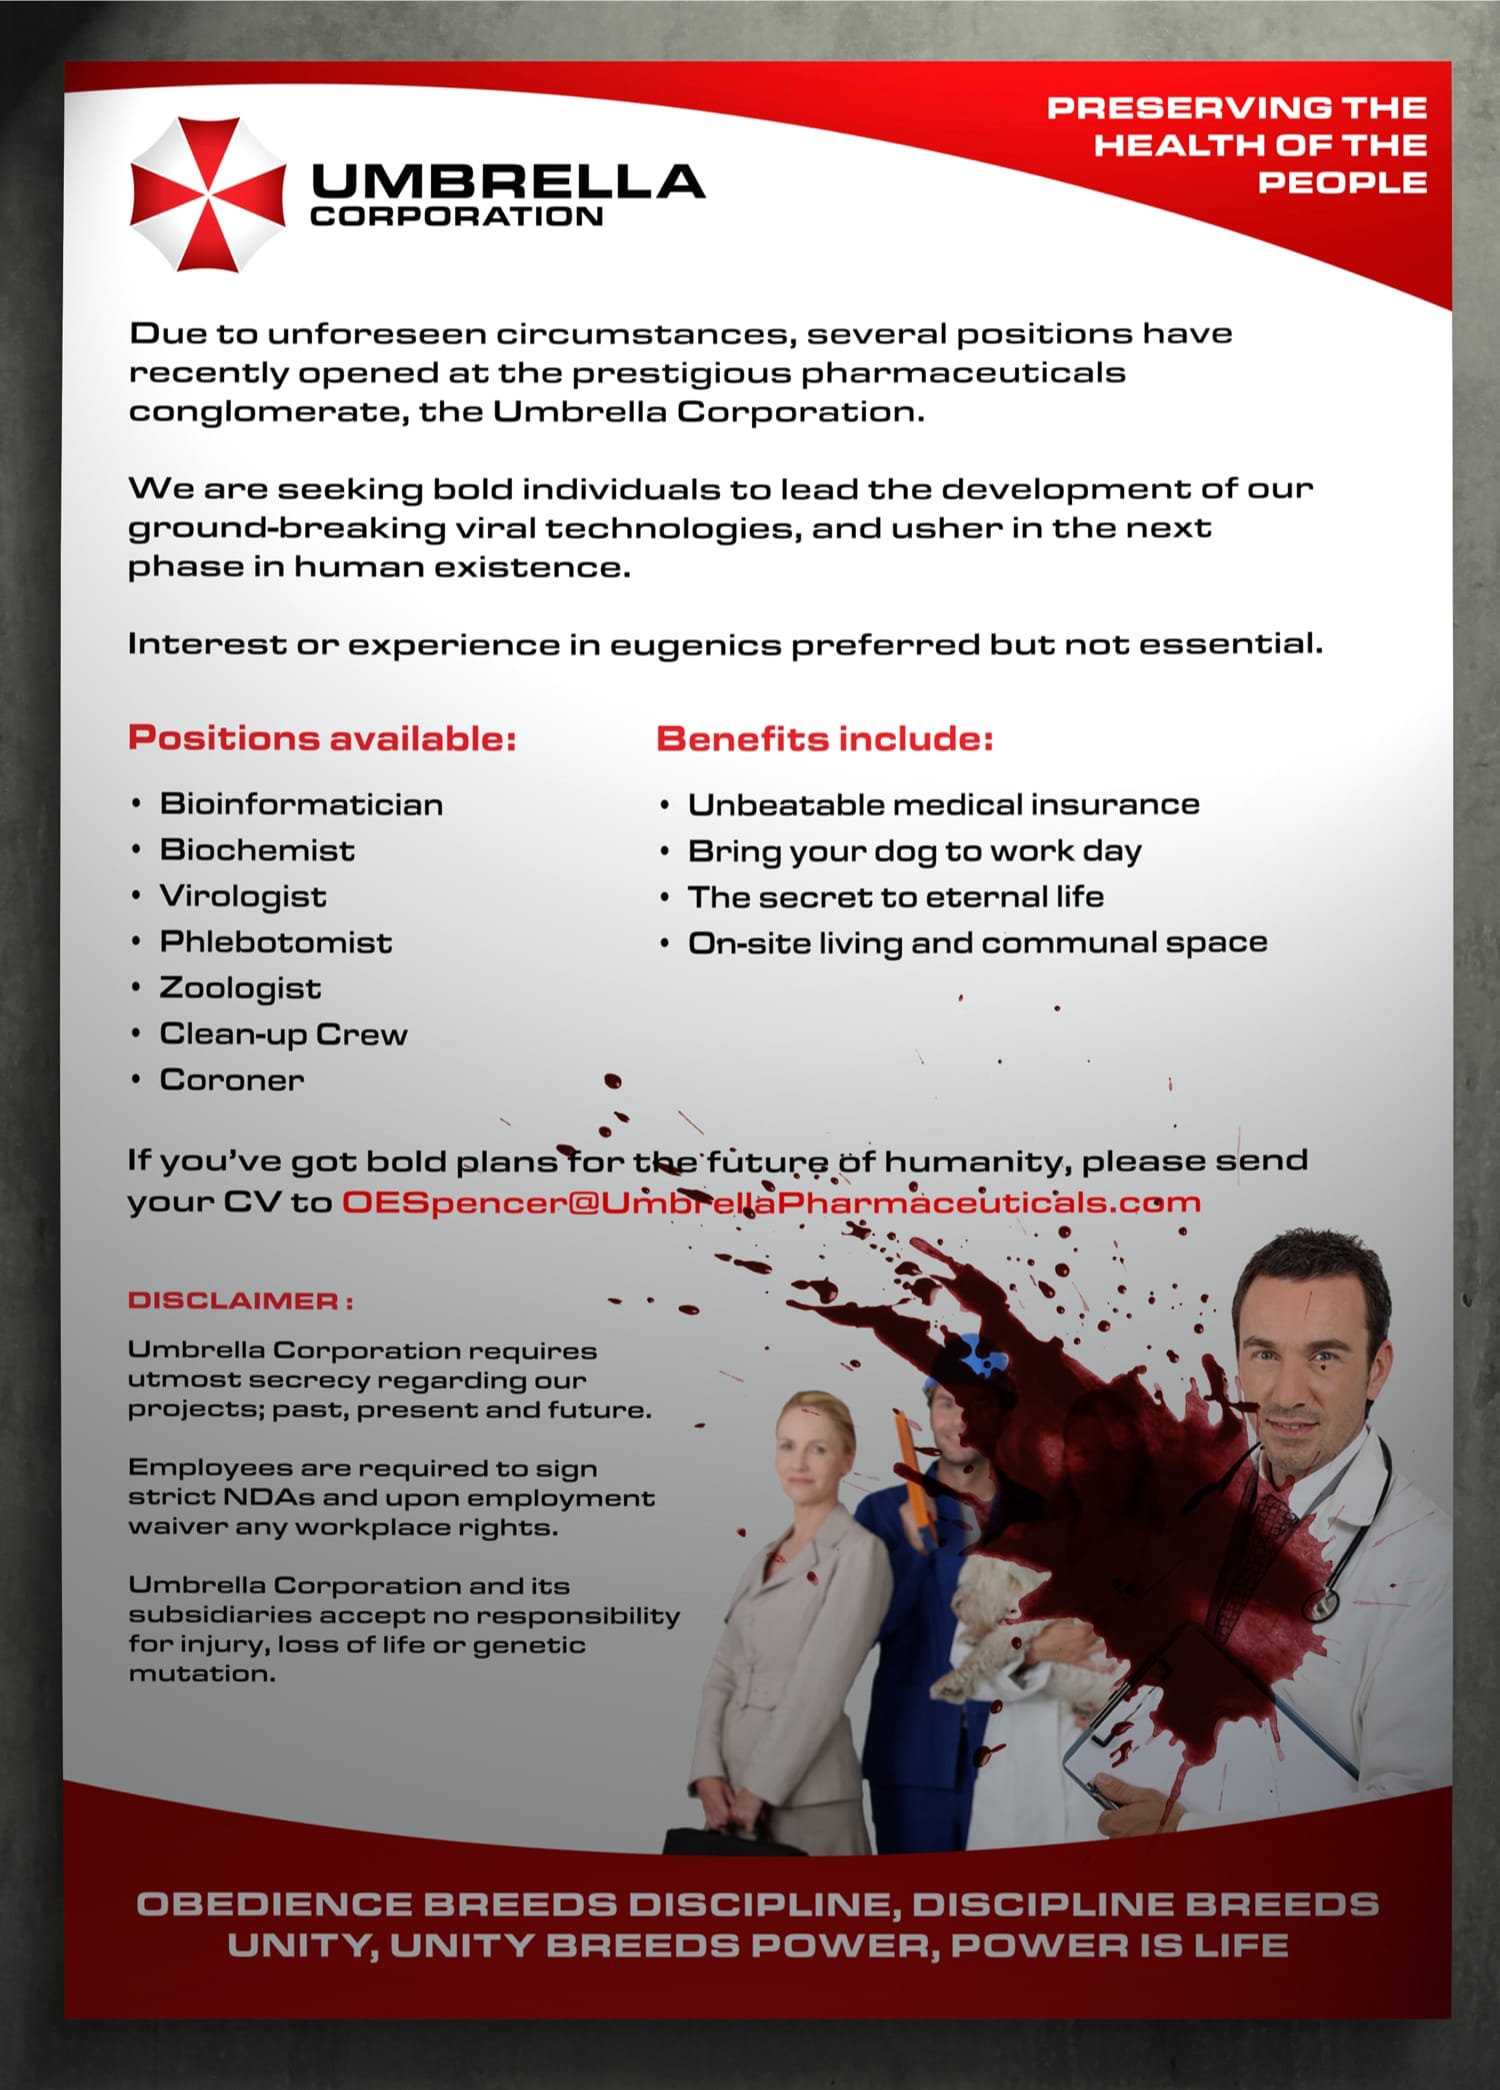 Fictional Resident Evil recruitment poster - Umbrella Corporation's advertisement for various positions